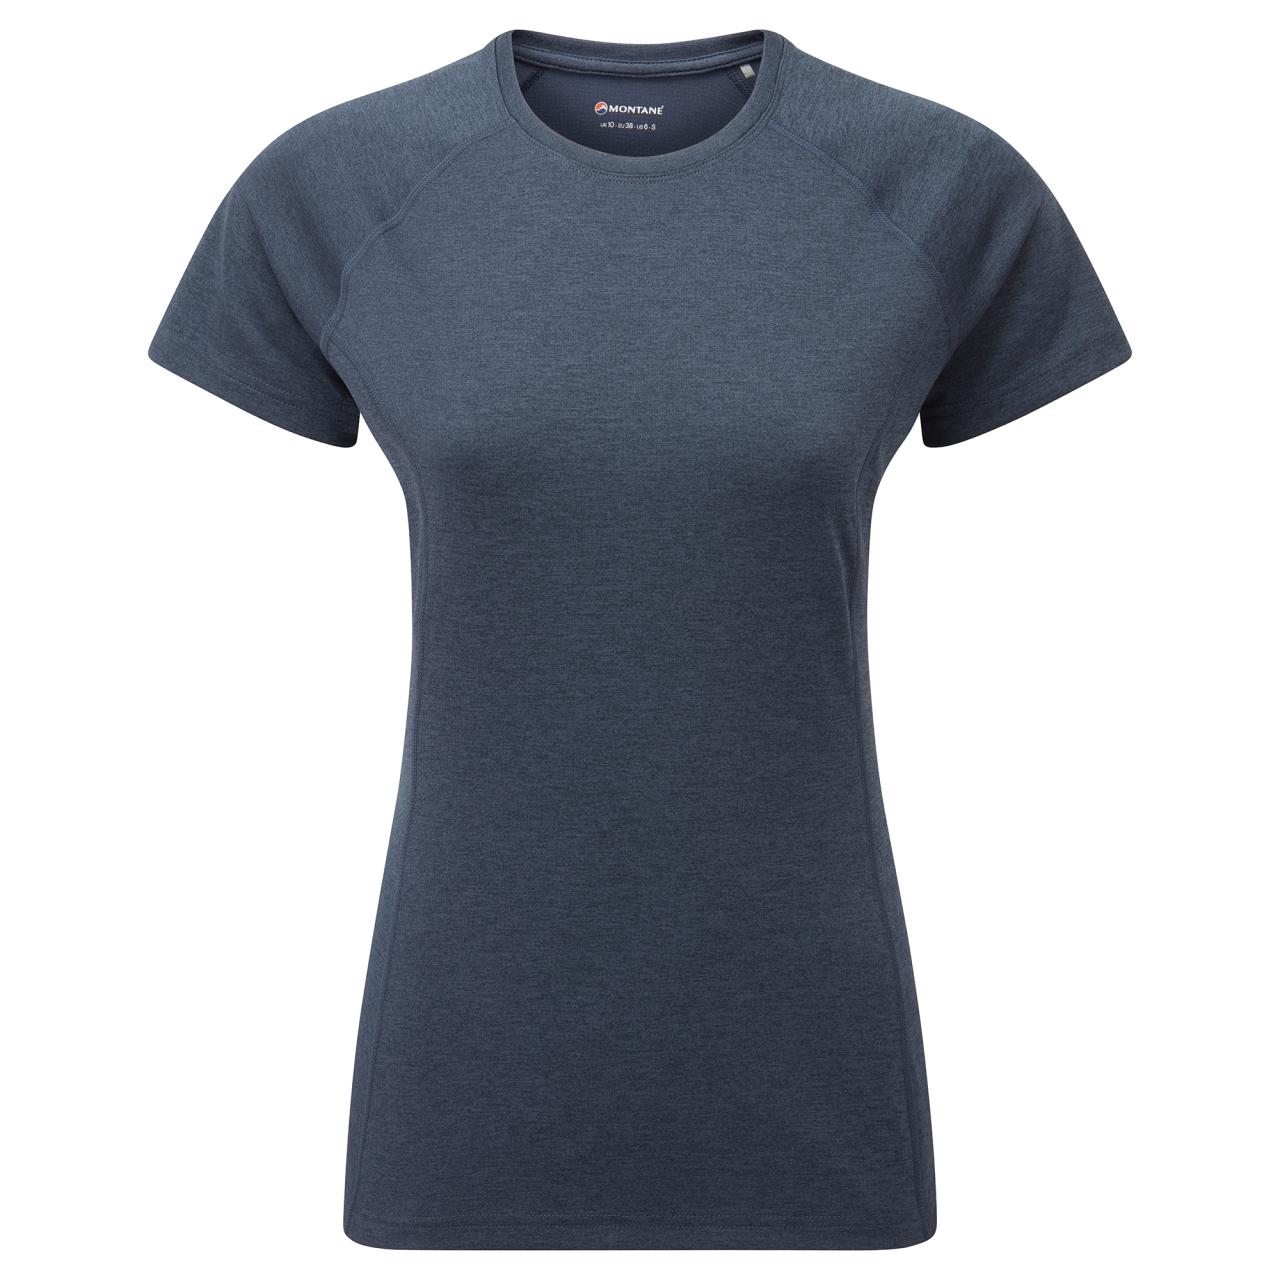 FEM DART T-SHIRT-ECLIPSE BLUE-UK10/S dámské triko modré